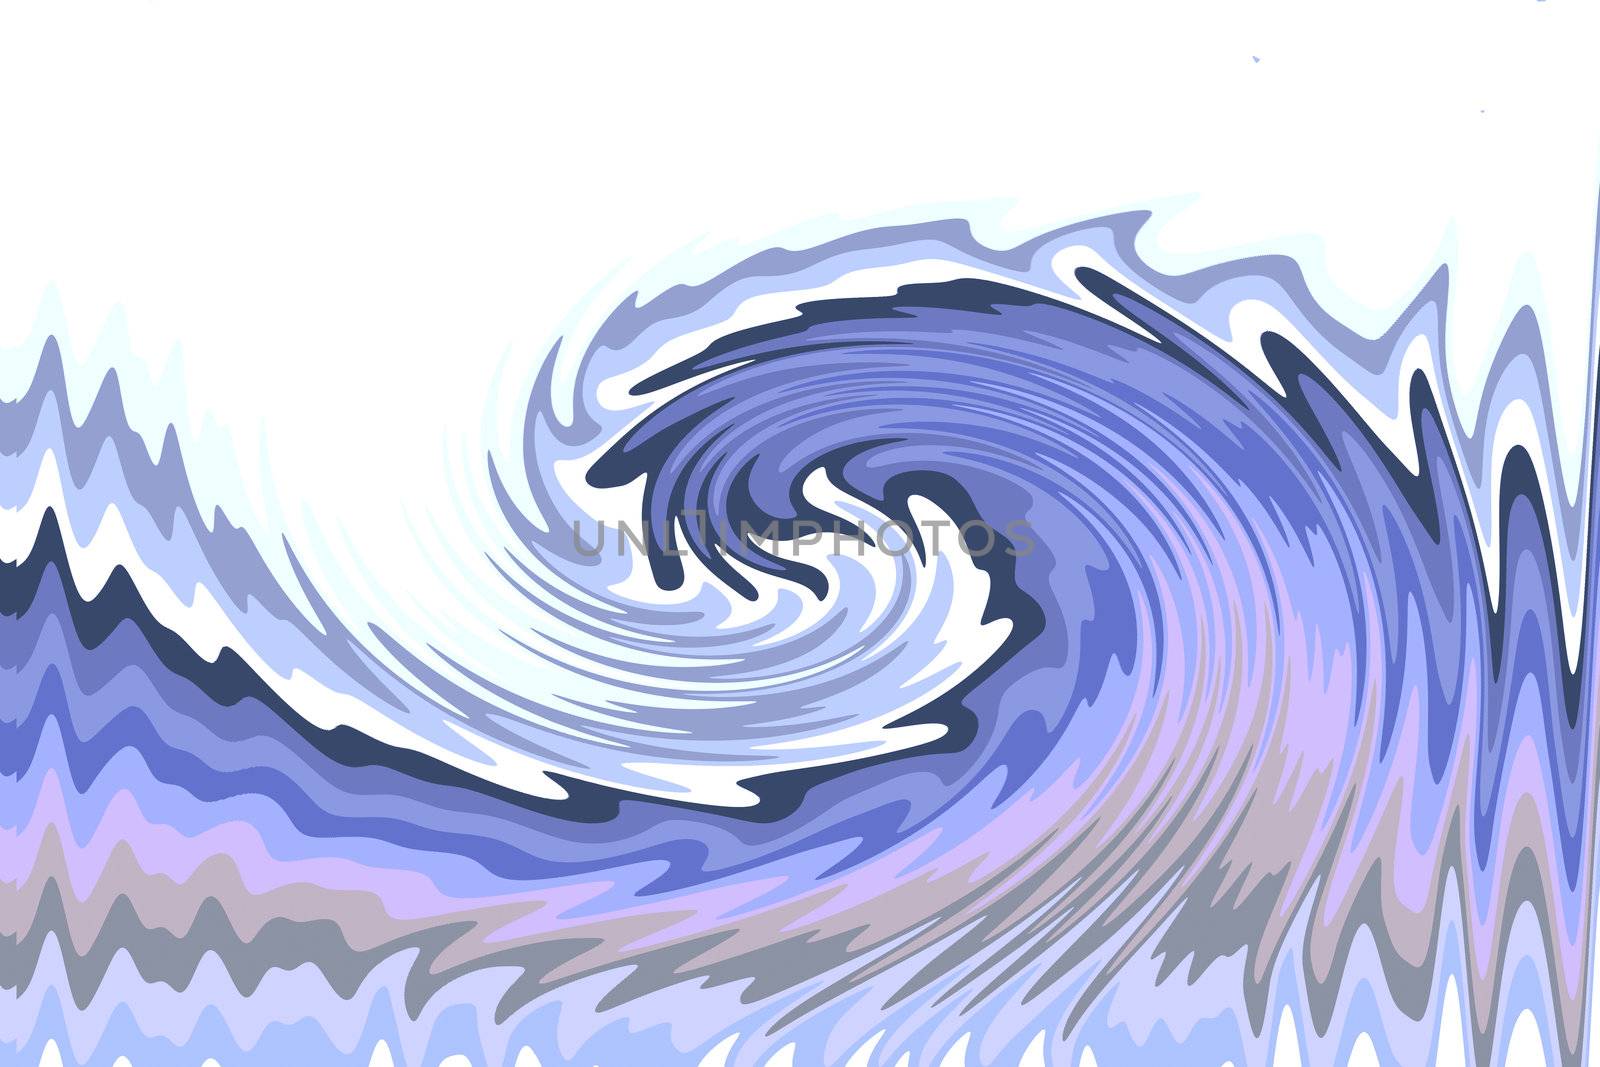 Illustration of a blue wave on a white background by velislava